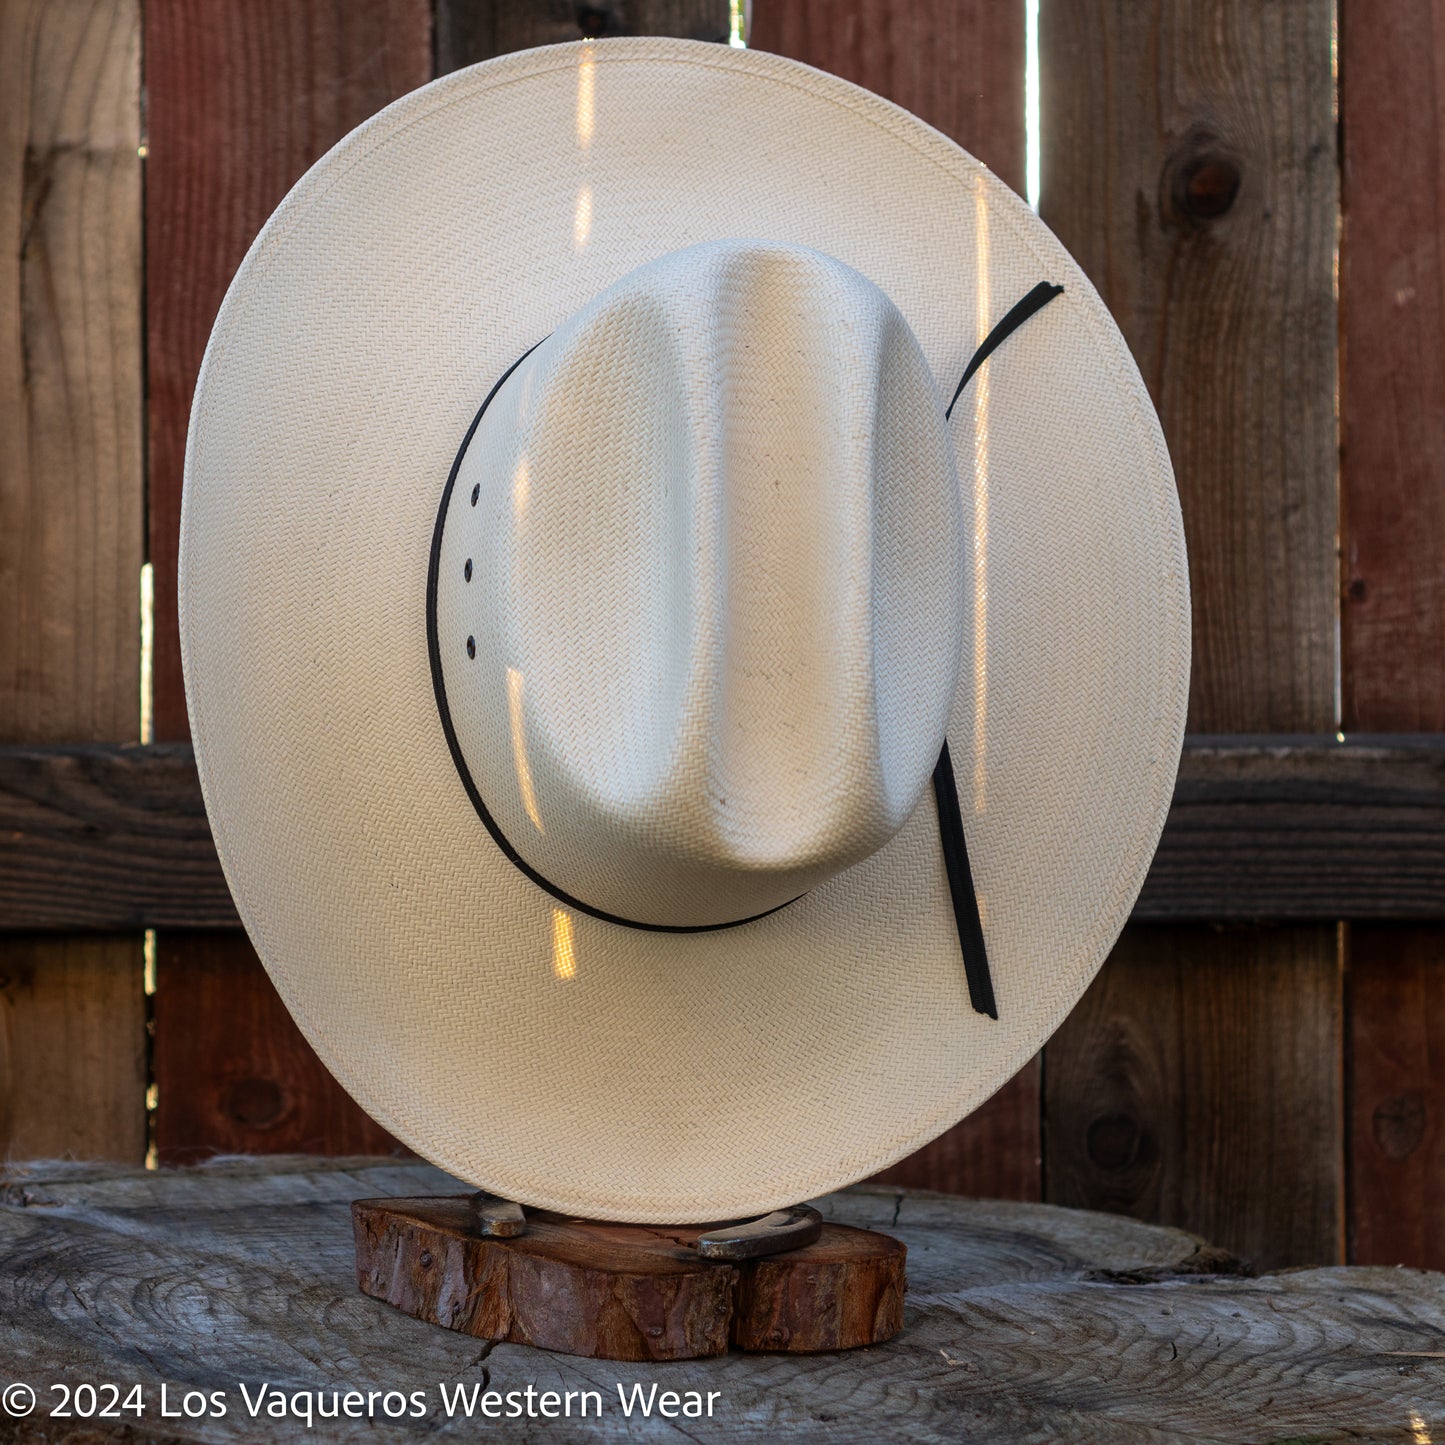 Resistol 10x Cattleman Cowboy Hat Straw Hat Natural